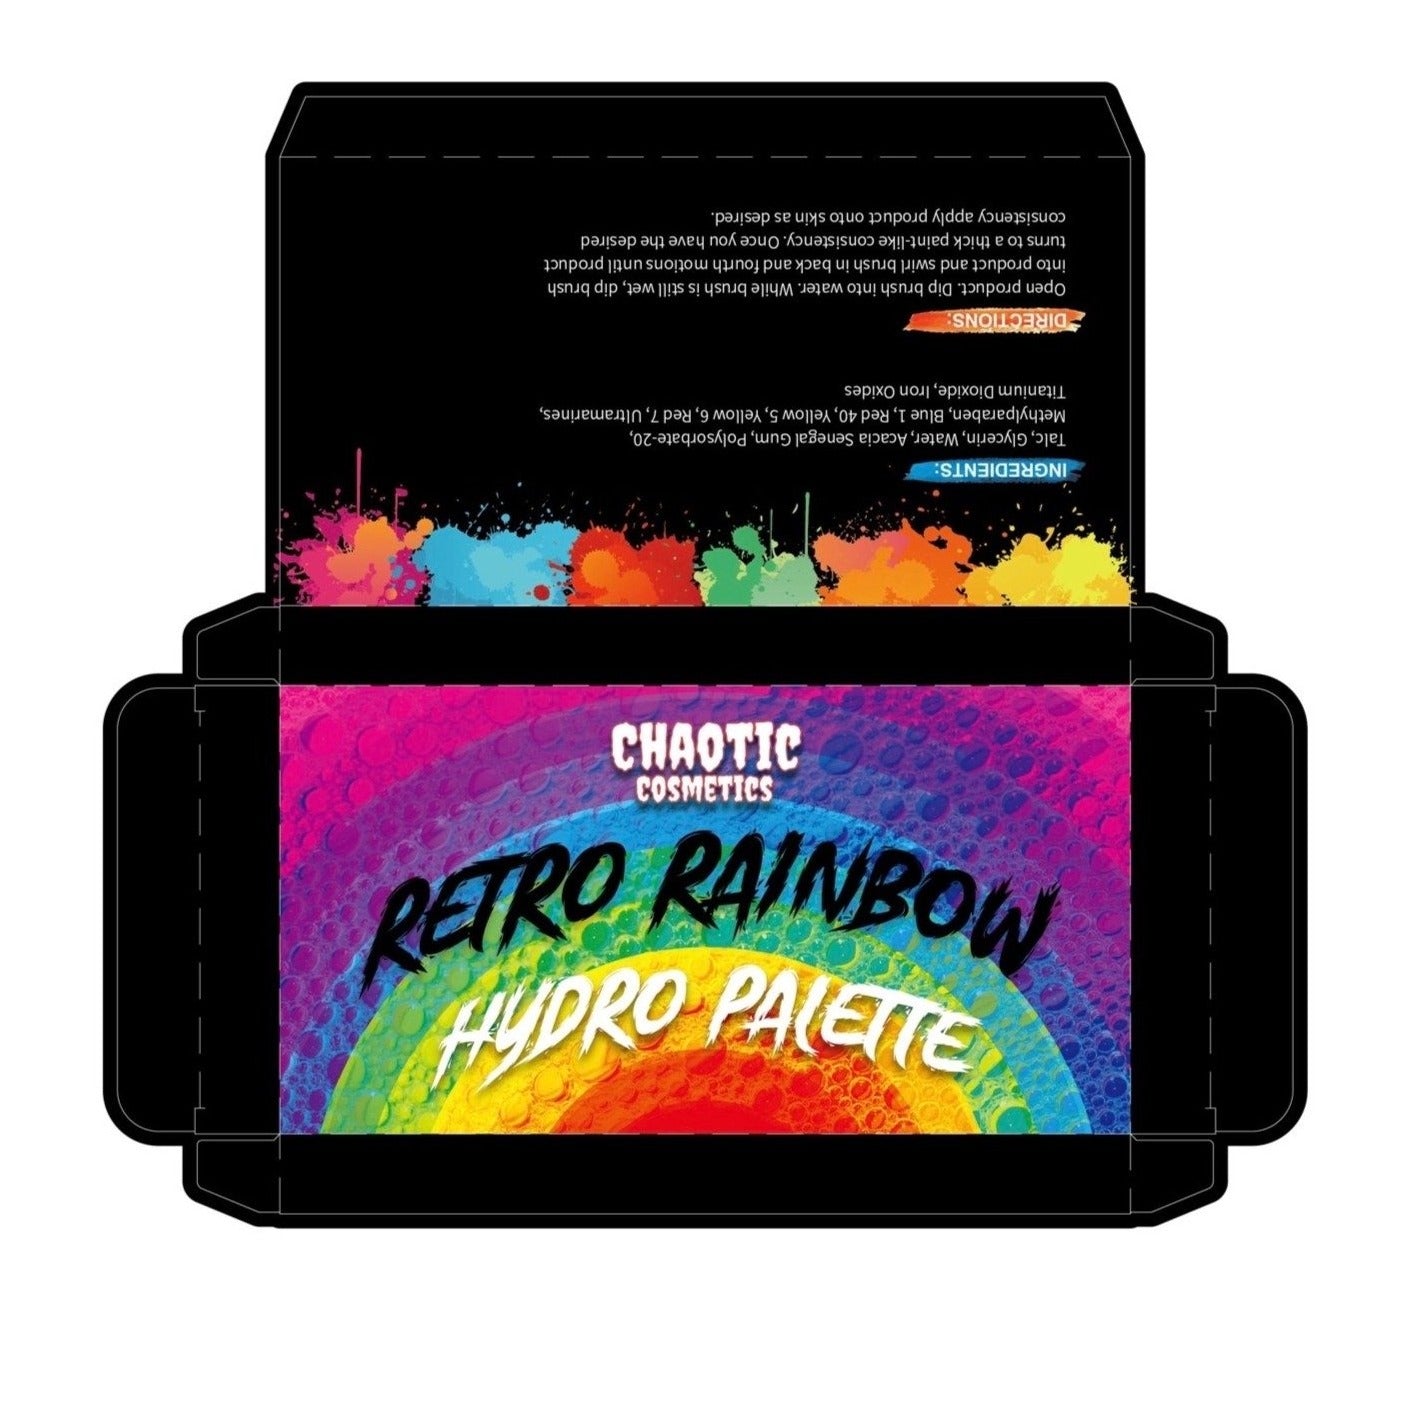 Retro Rainbow Hydro Palette